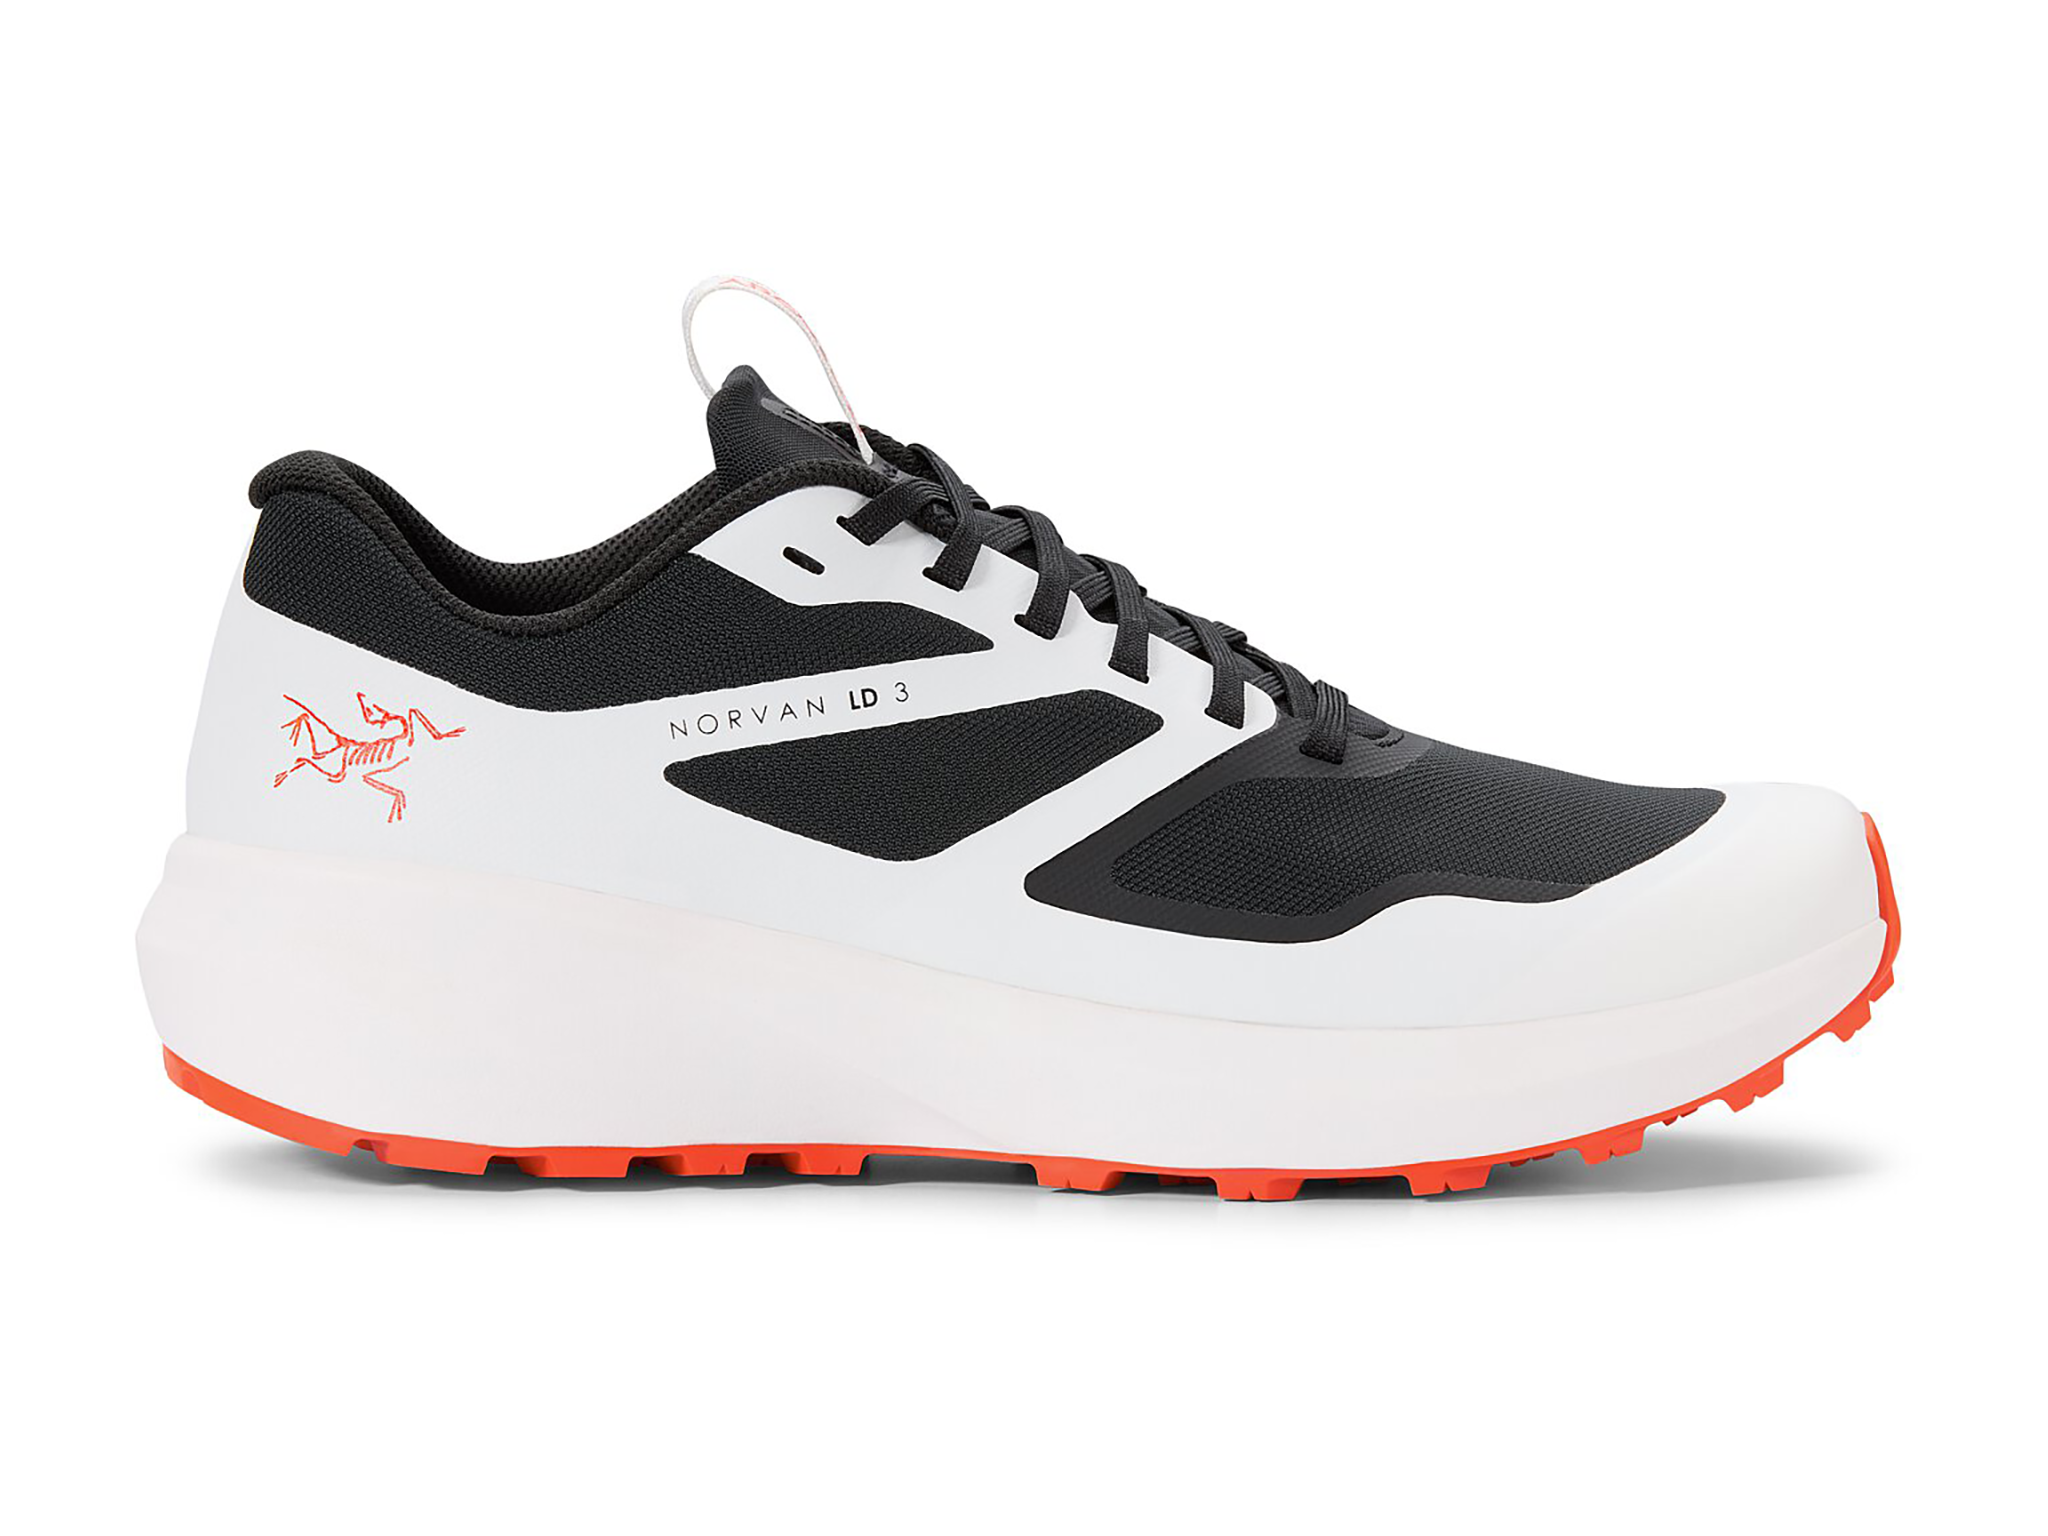 best women’s trail running shoes Arc’teryx norvan LD 3 shoe